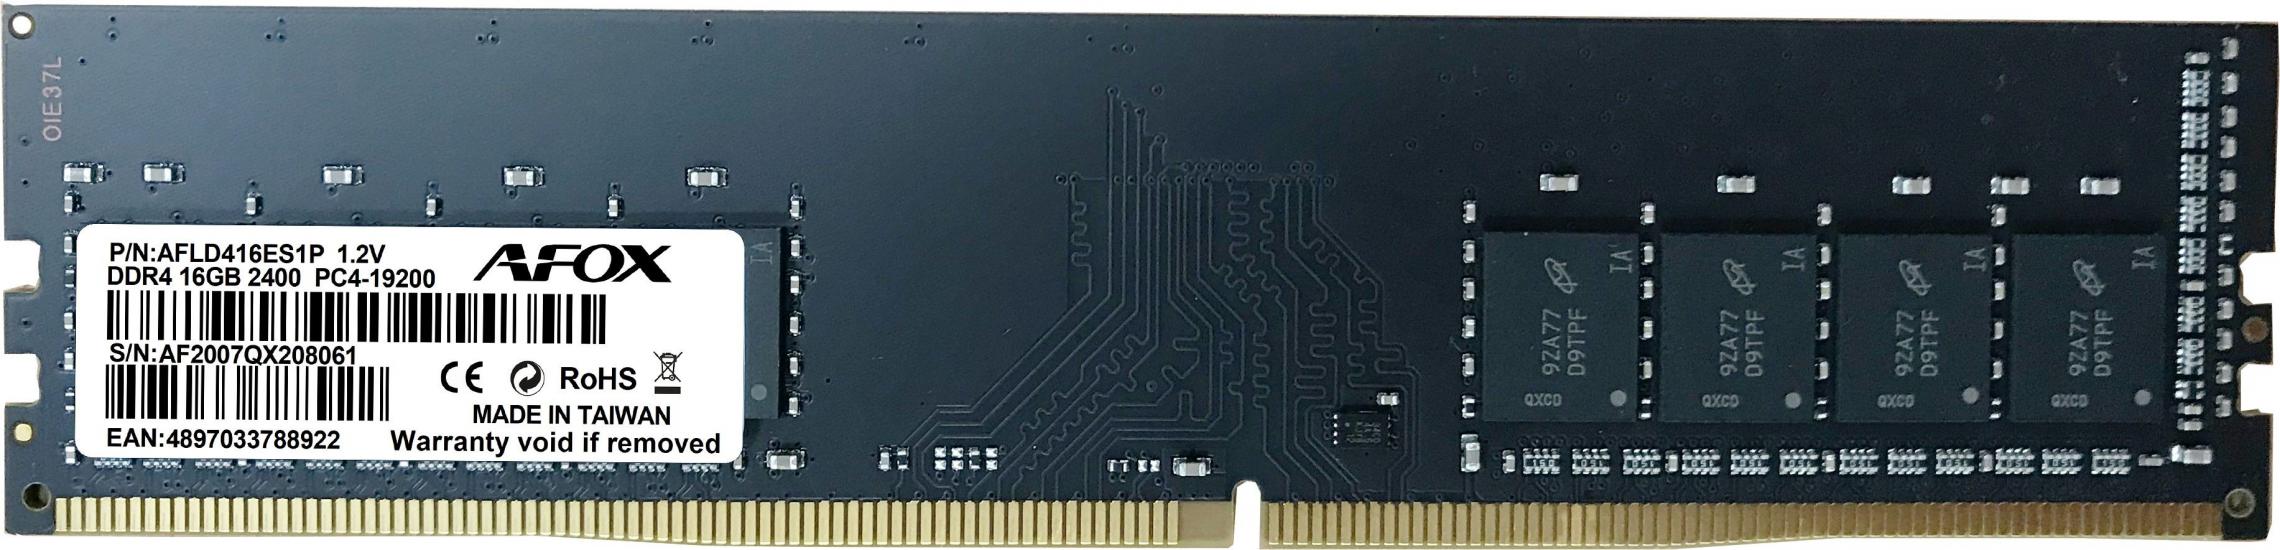 AFOX AFLD416ES1P DIM MEMORY DDR4 16GB 2400Mhz MICRON CHIP